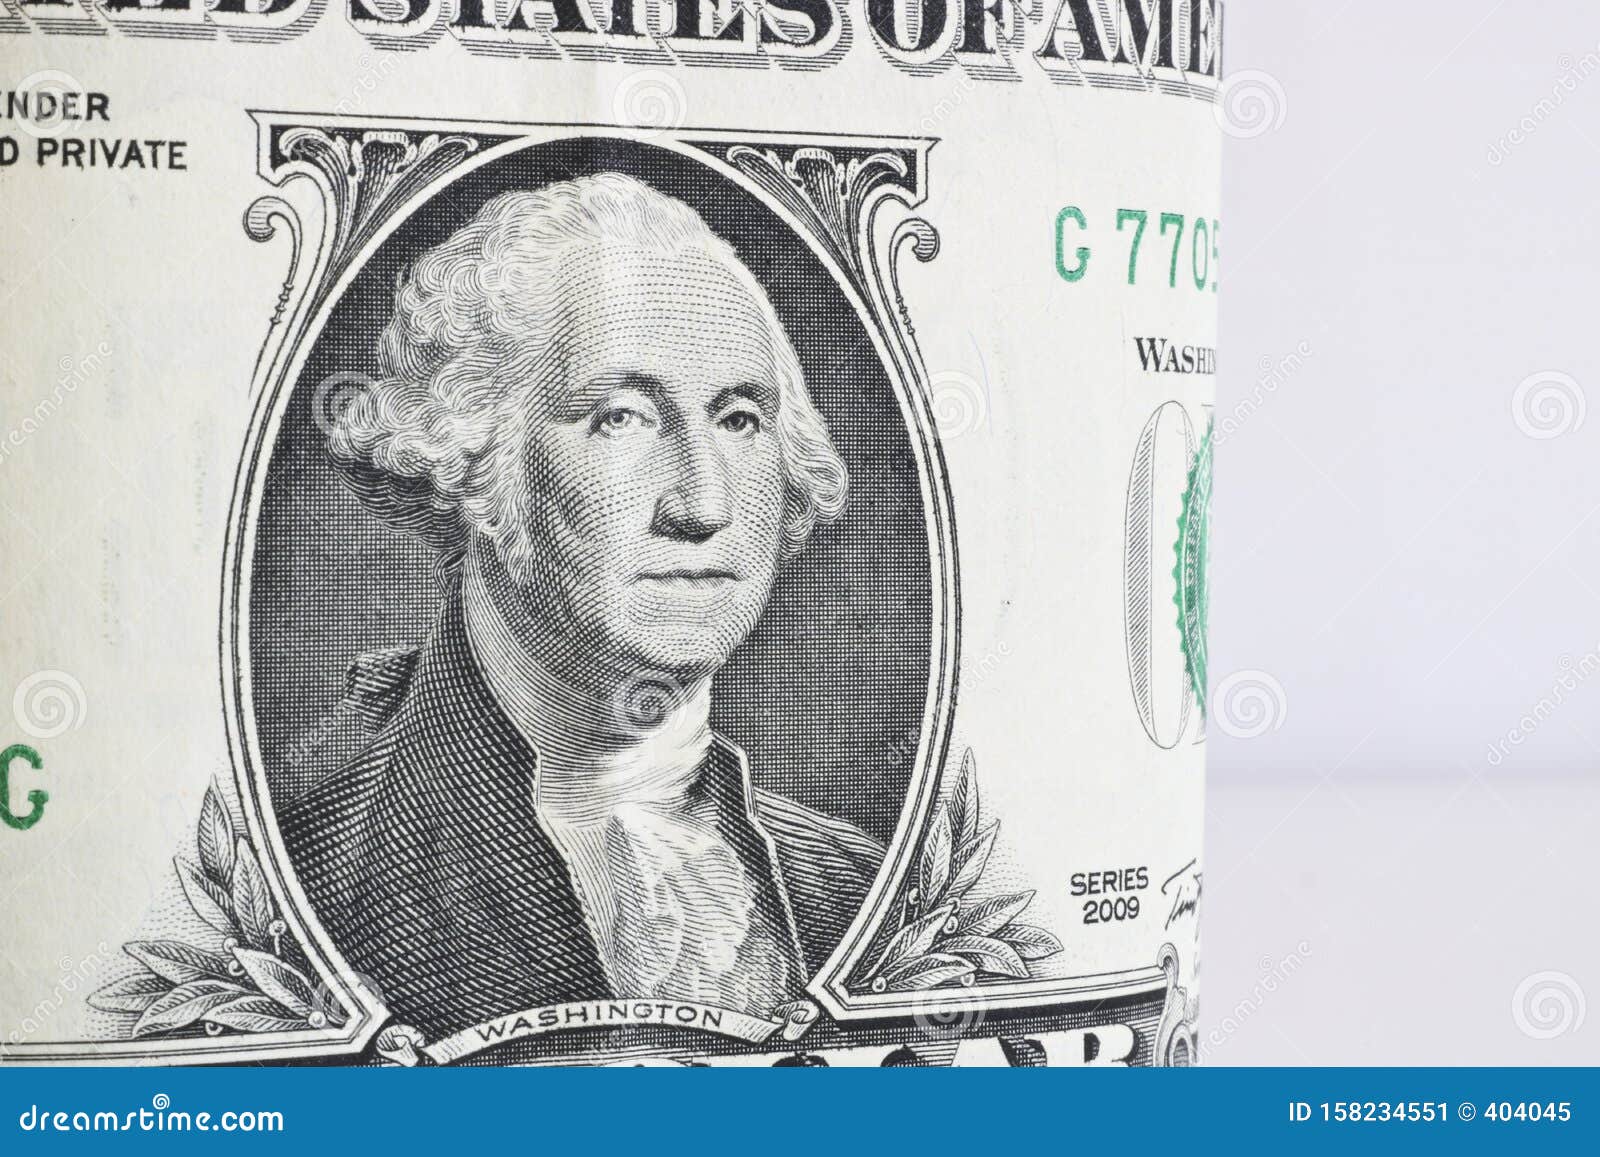 Us President Washington On A Bent 1 Dollar Bill Stock Image